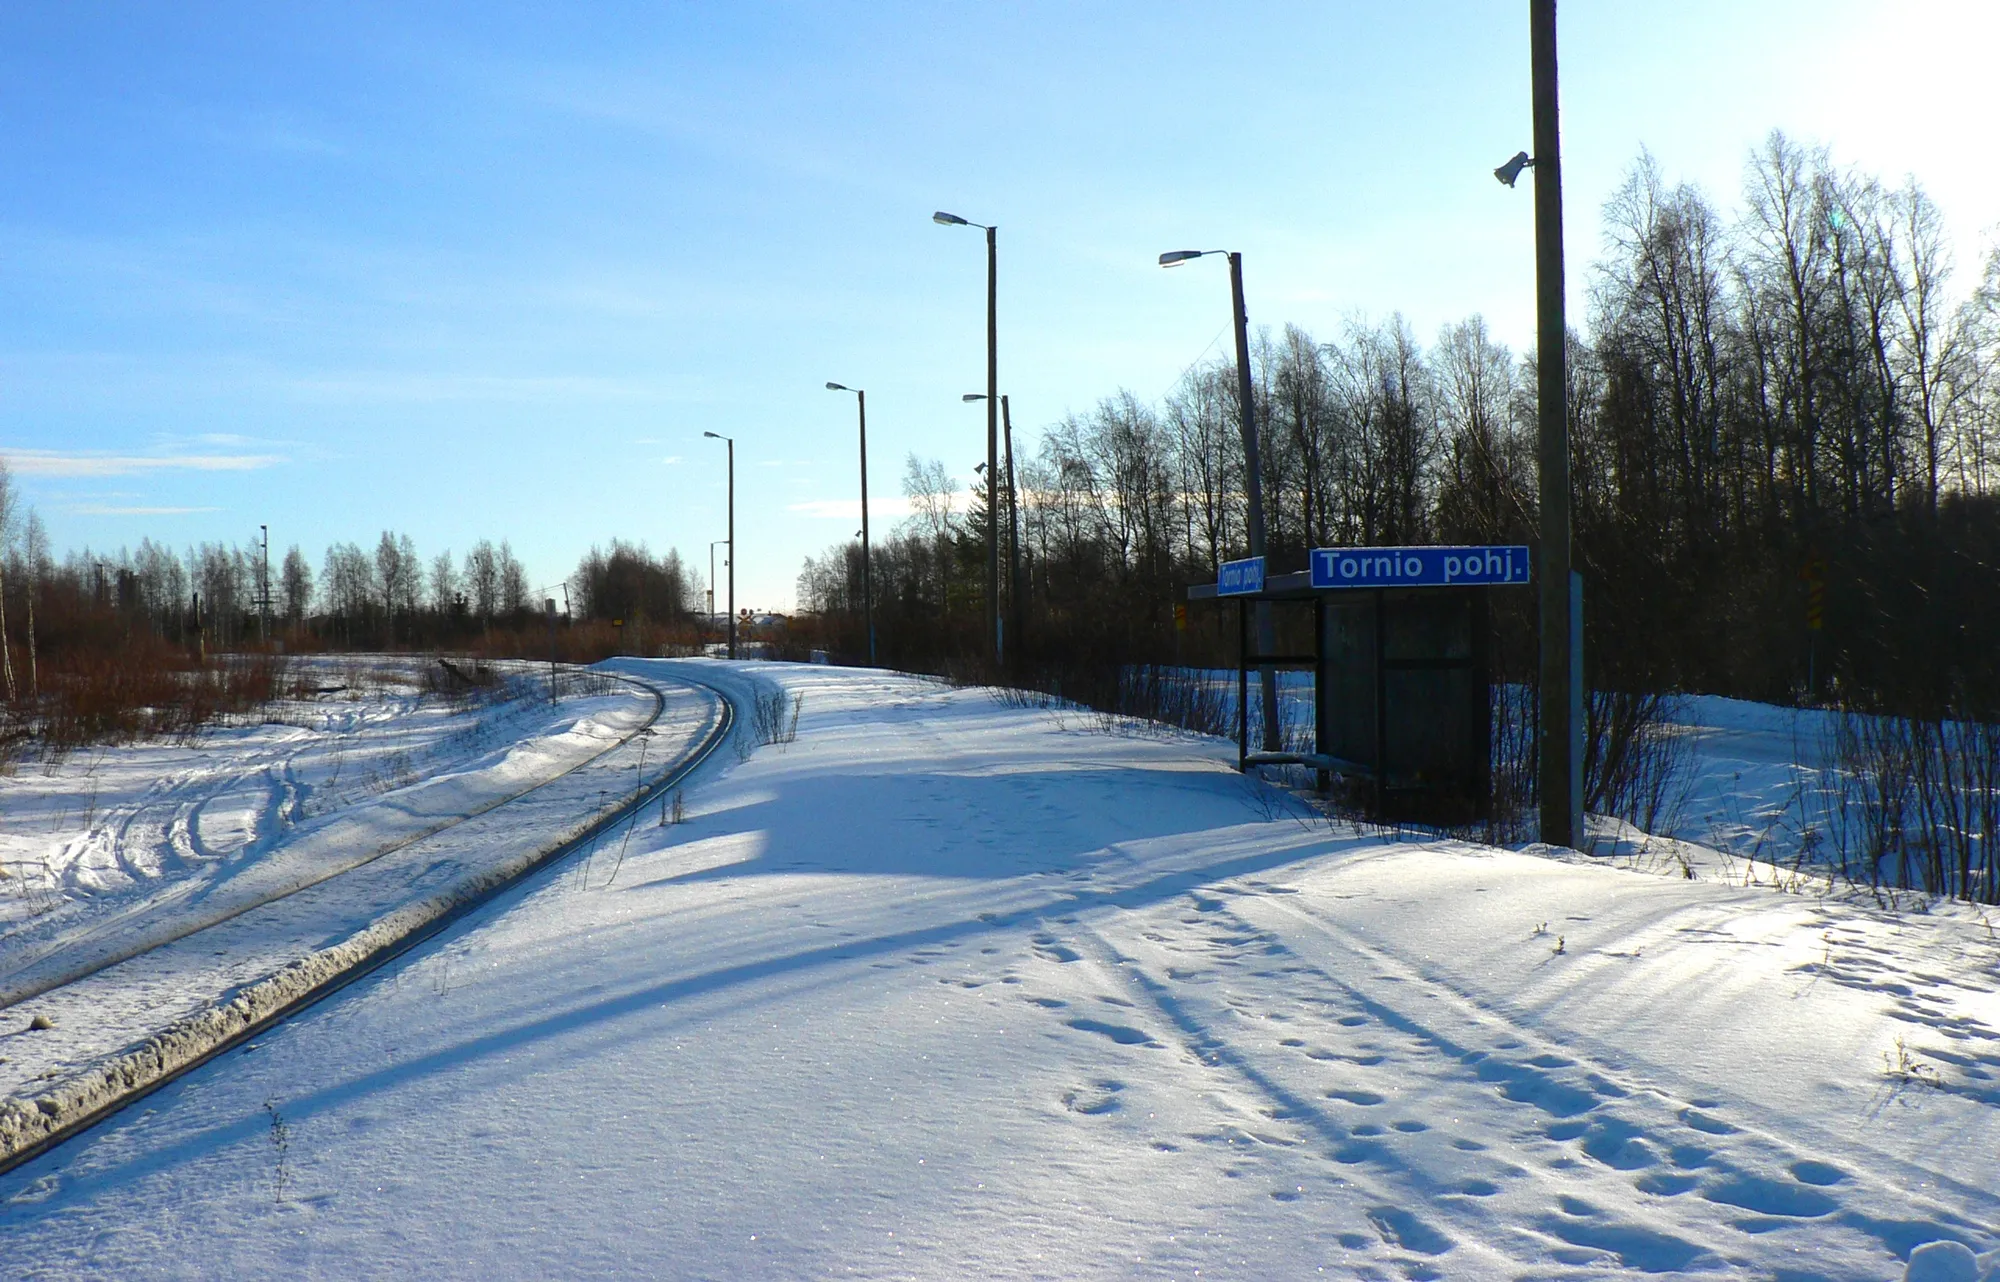 Photo showing: Tornio-Pohjoinen ("Tornio North"), a former railway stop in Tornio, Finland.